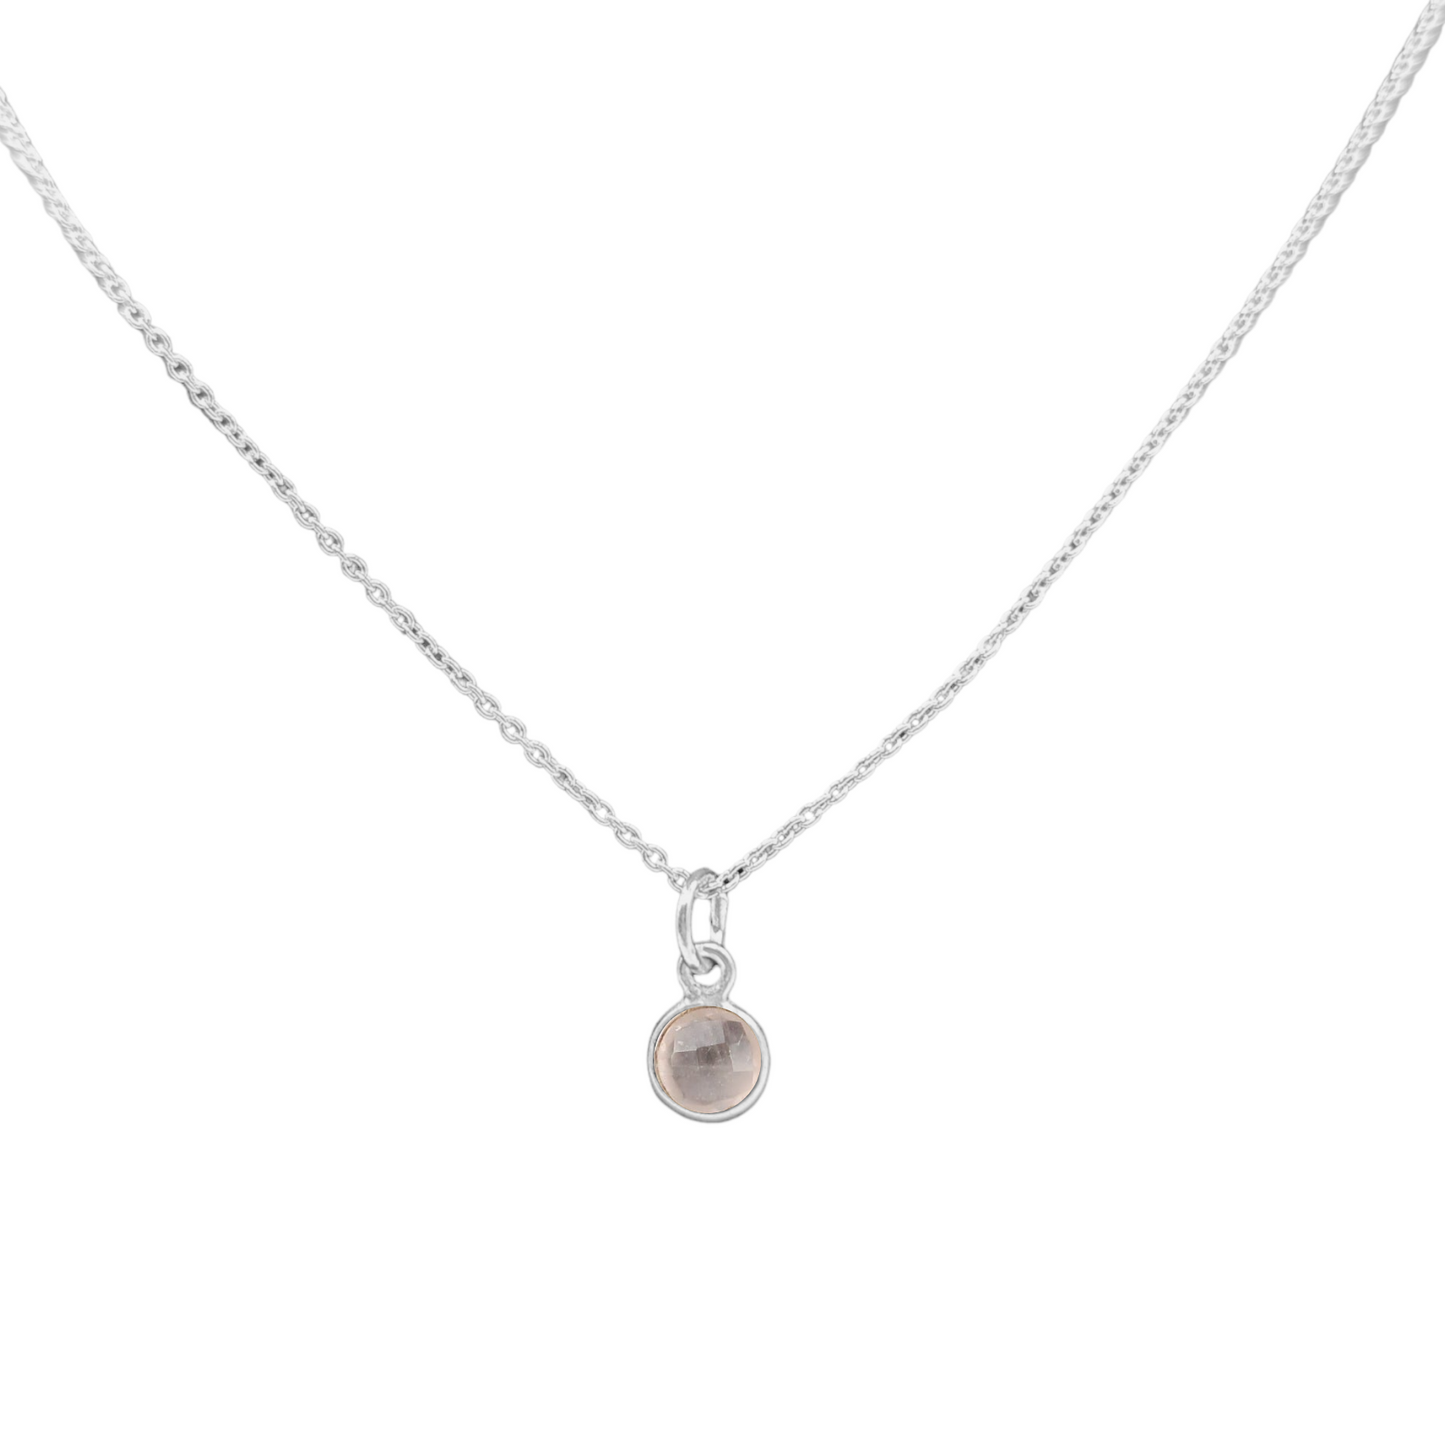 Silver birthstone necklace